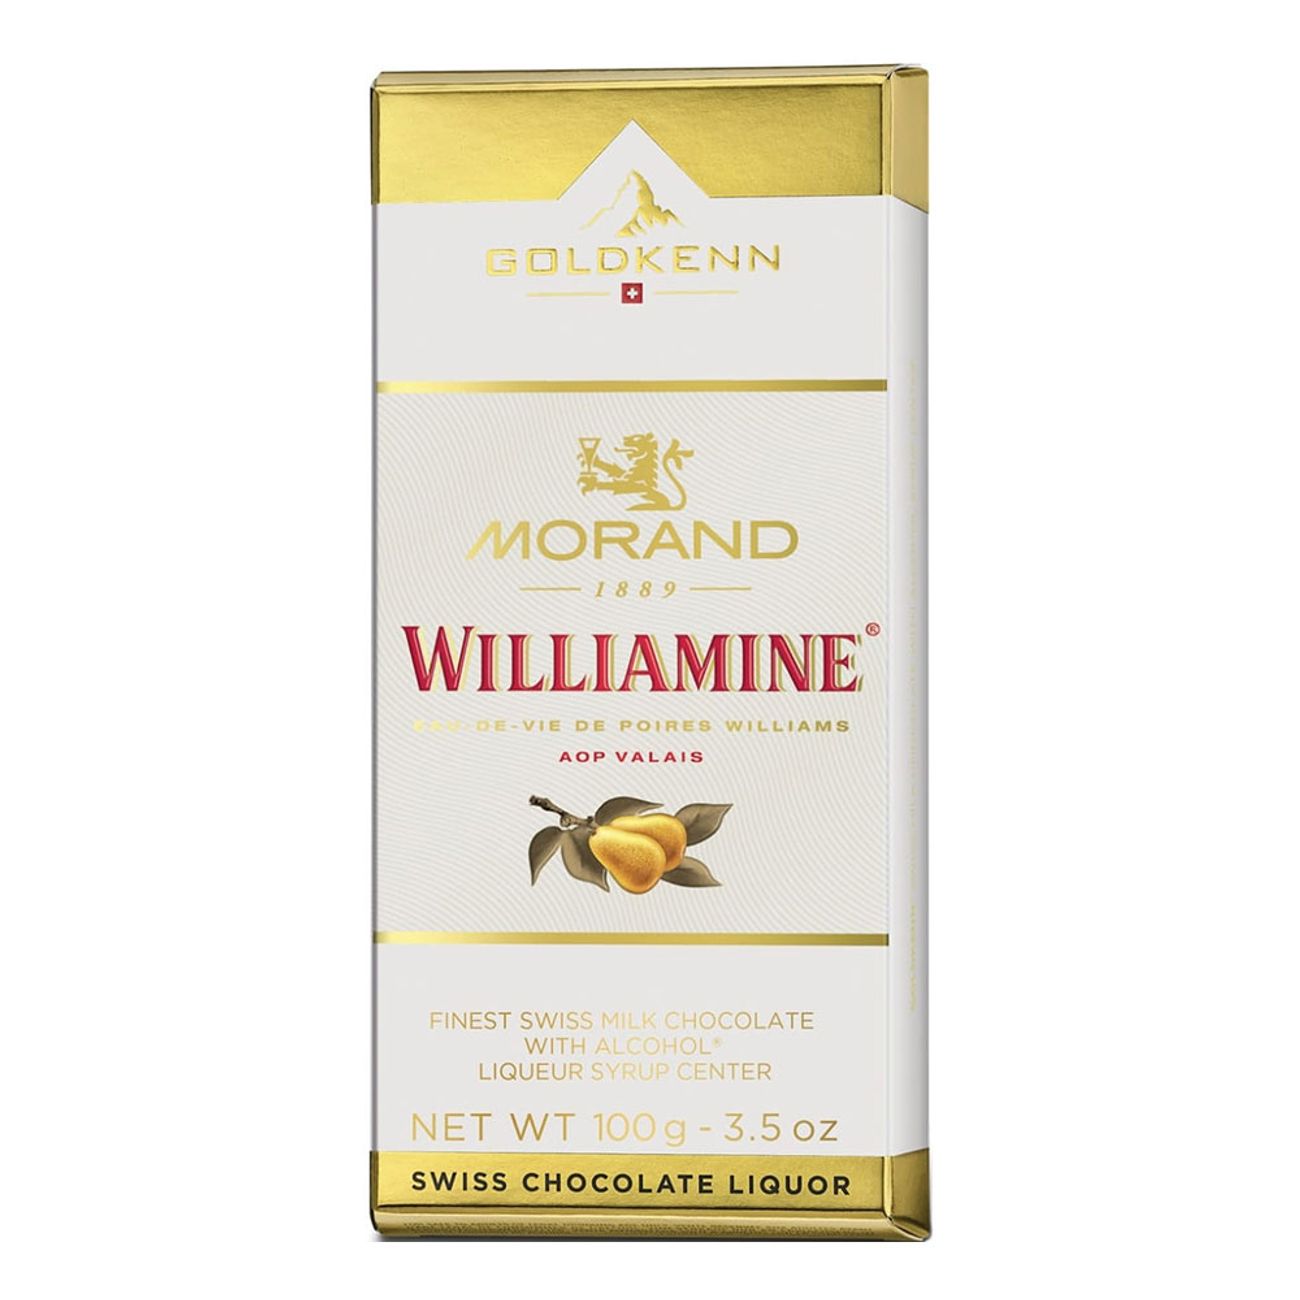 Goldkenn williamine